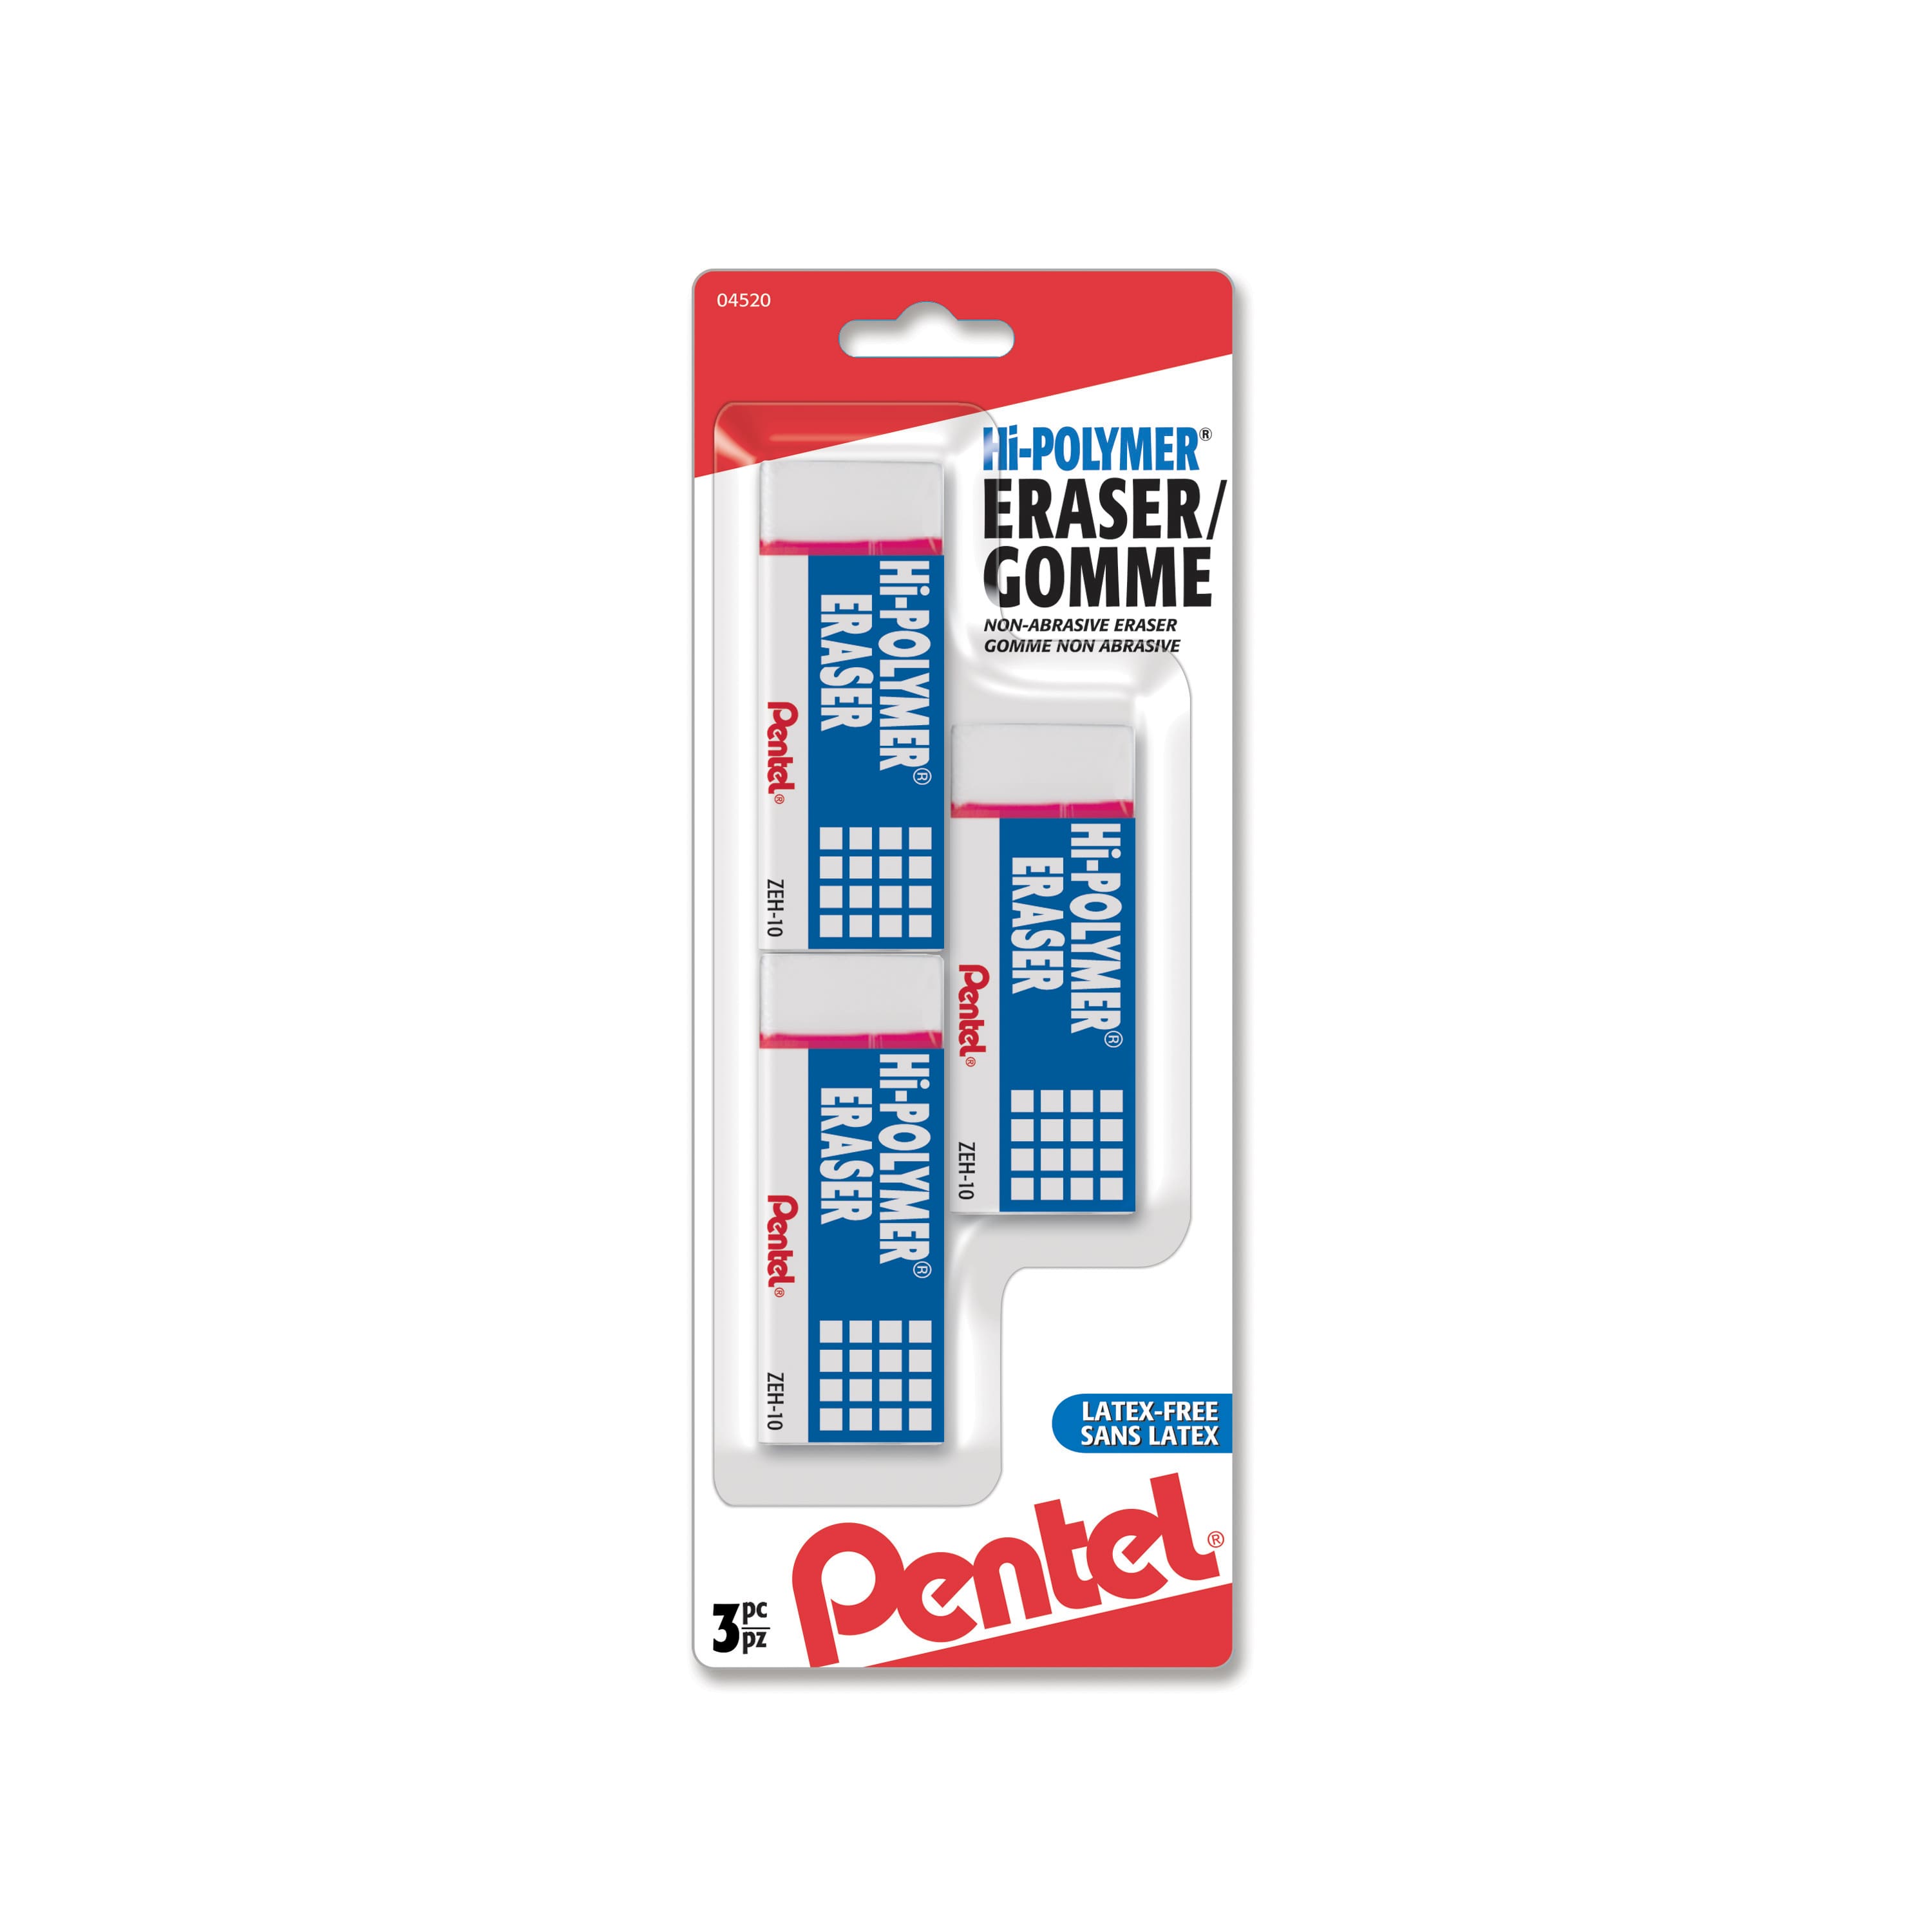 ZEH-10 Pentel Hi-Polymer Block Eraser, White Eraser, Large, Pack of 1